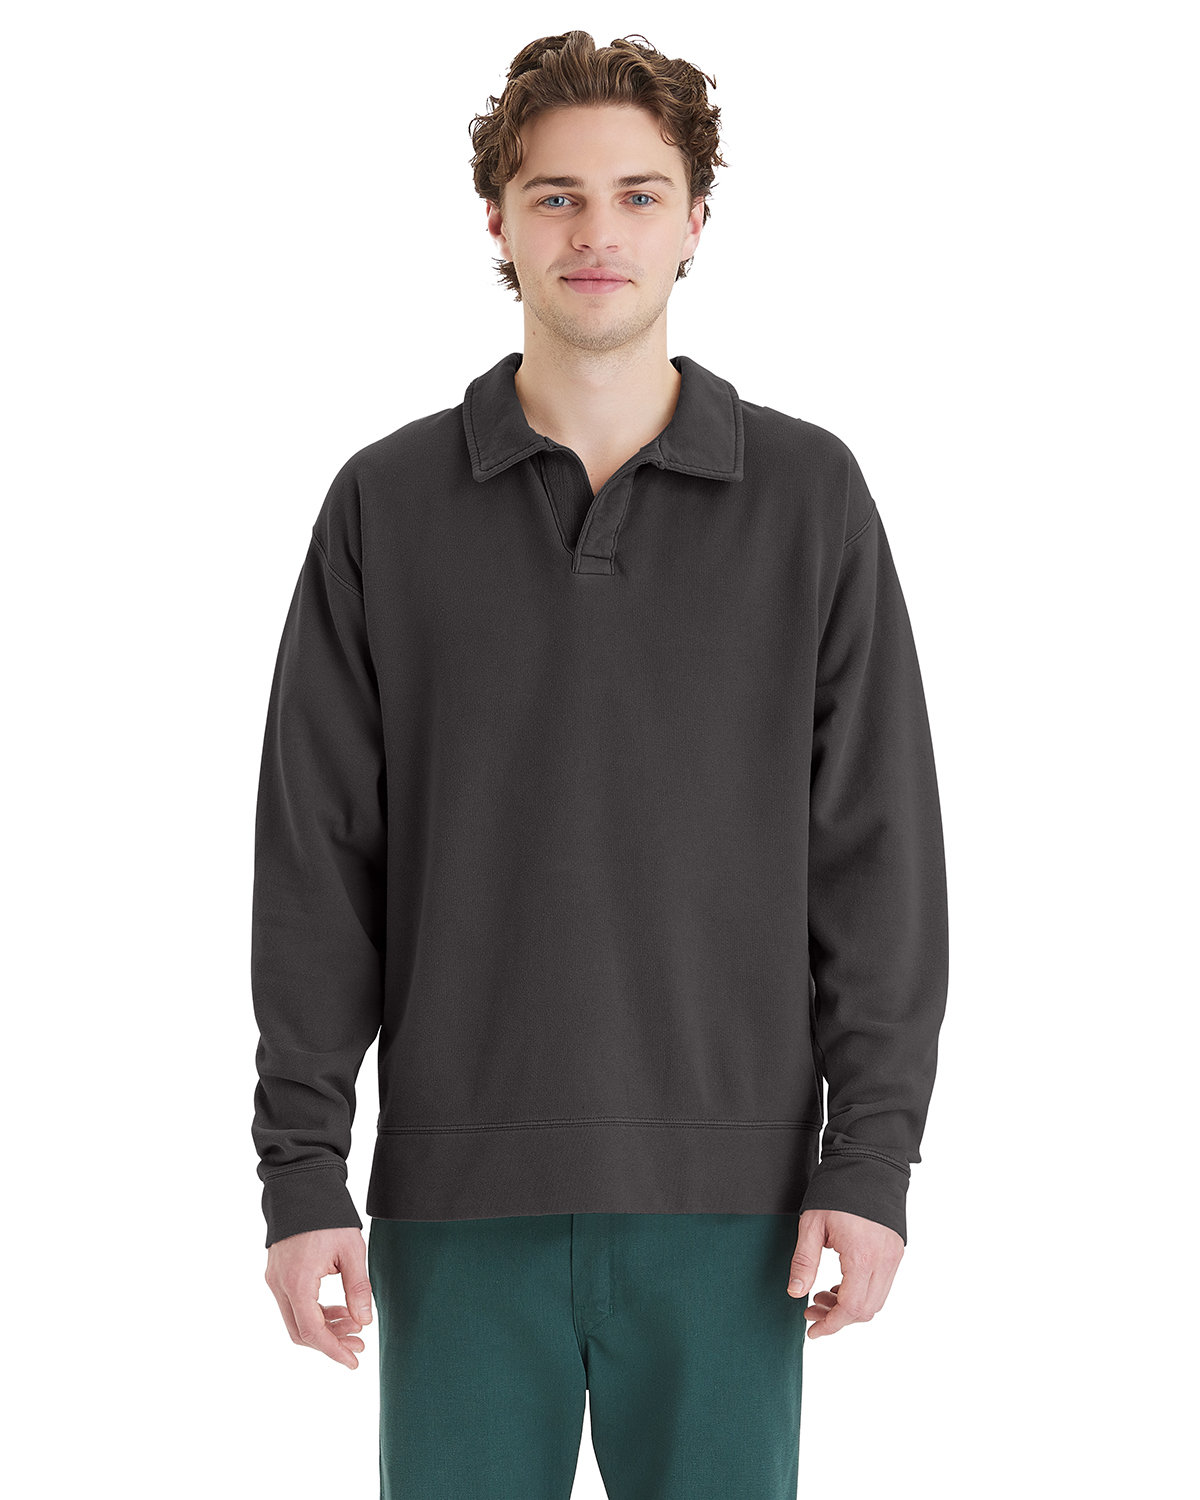 Hanes ComfortWash GDH490 - Unisex Garment Dye Polo Collar Sweatshirt